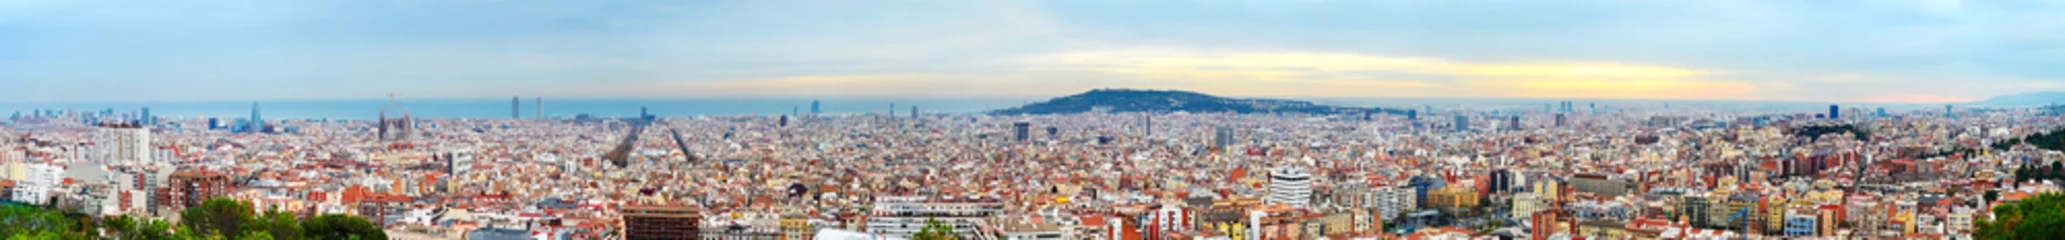 Cercles muraux Barcelona Barcelona panorama